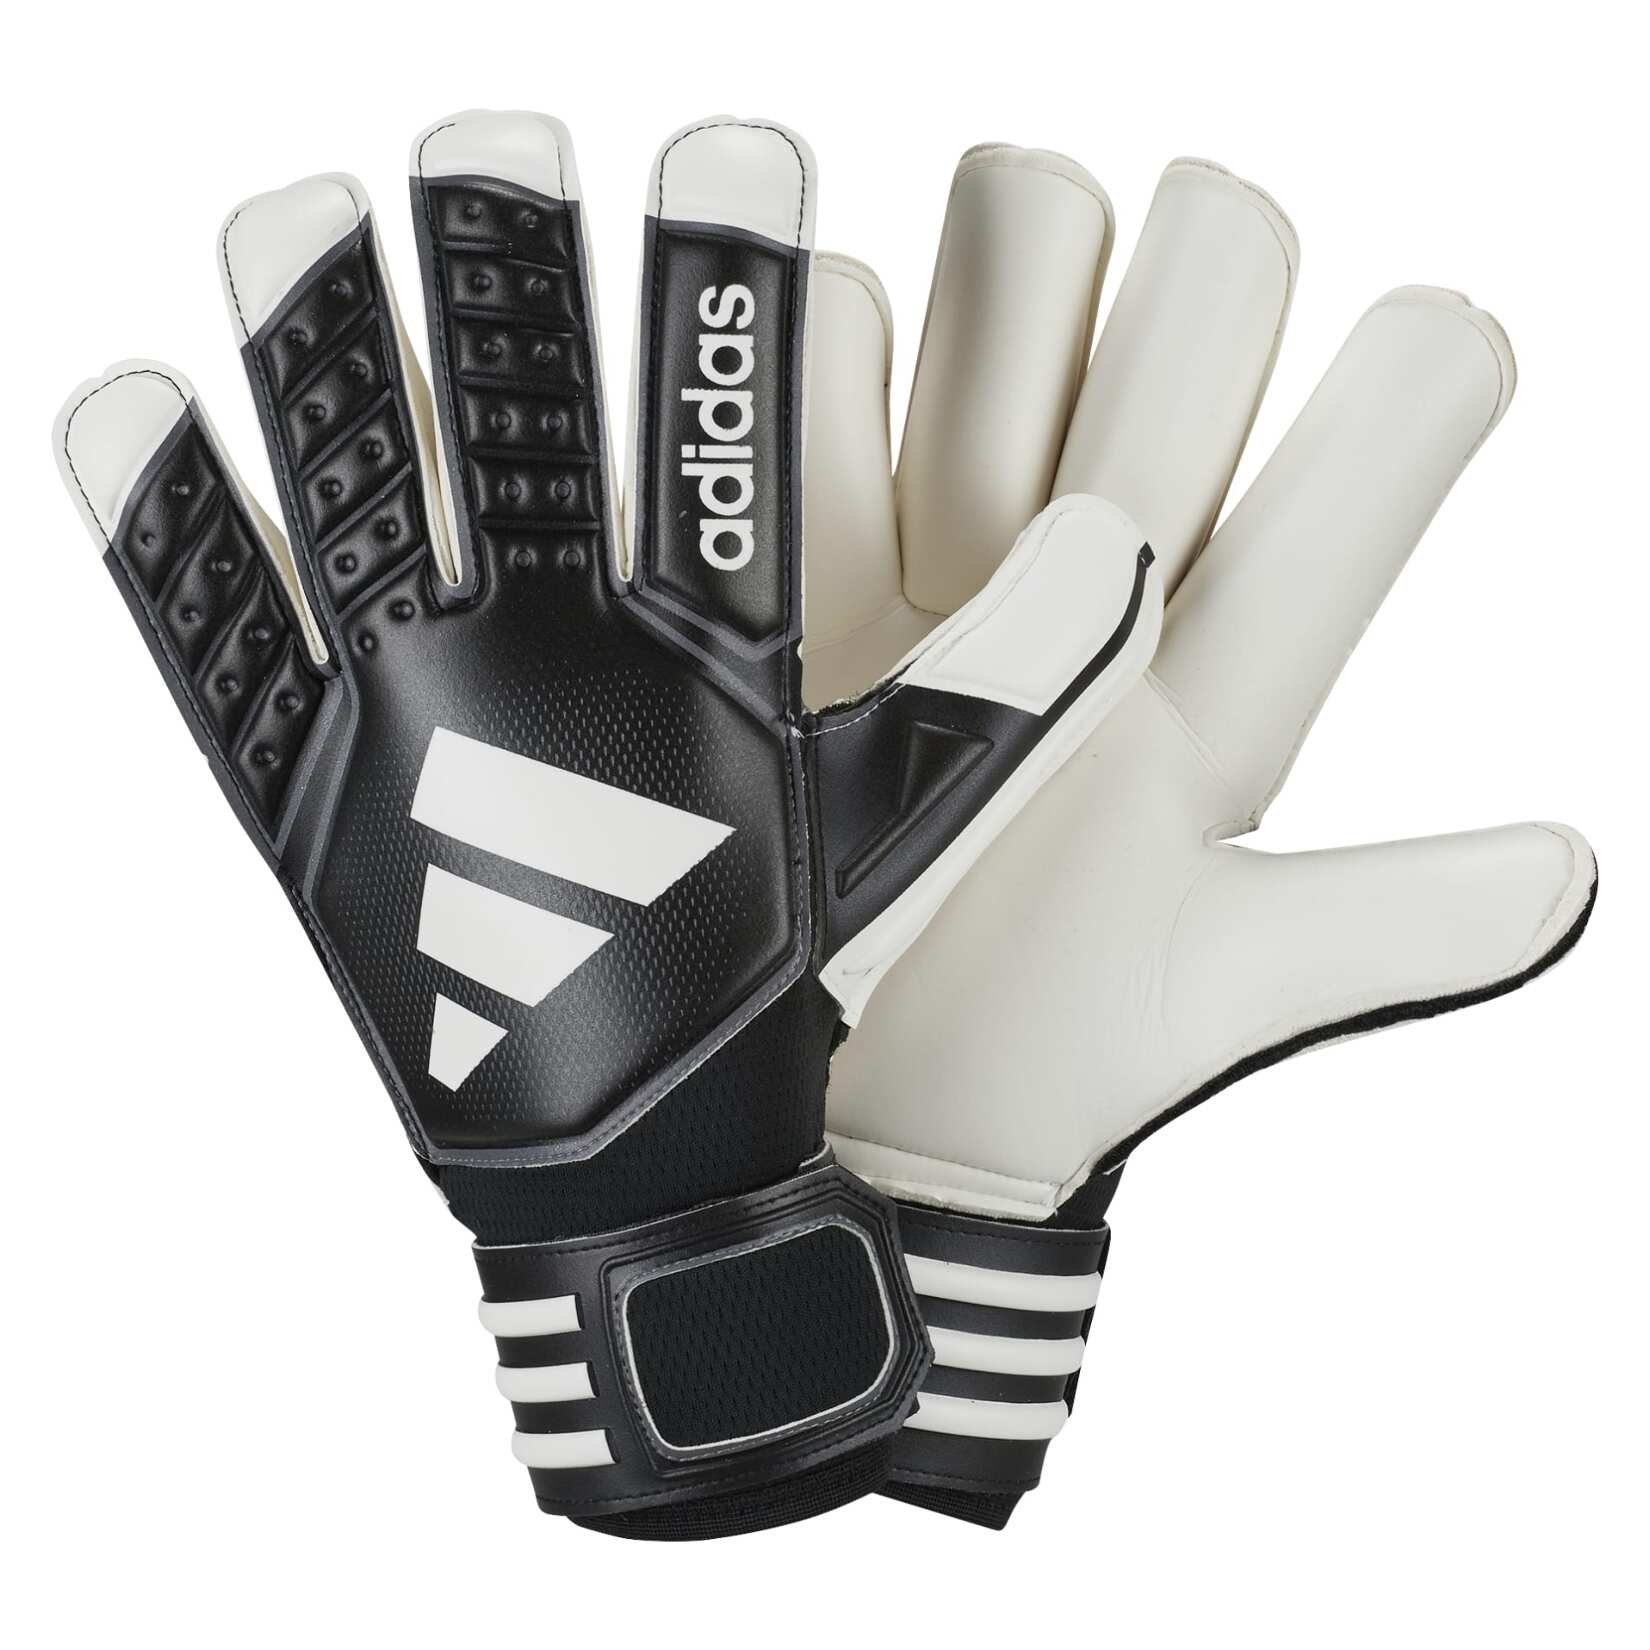 adidas Tiro League Goalkeeper Gloves